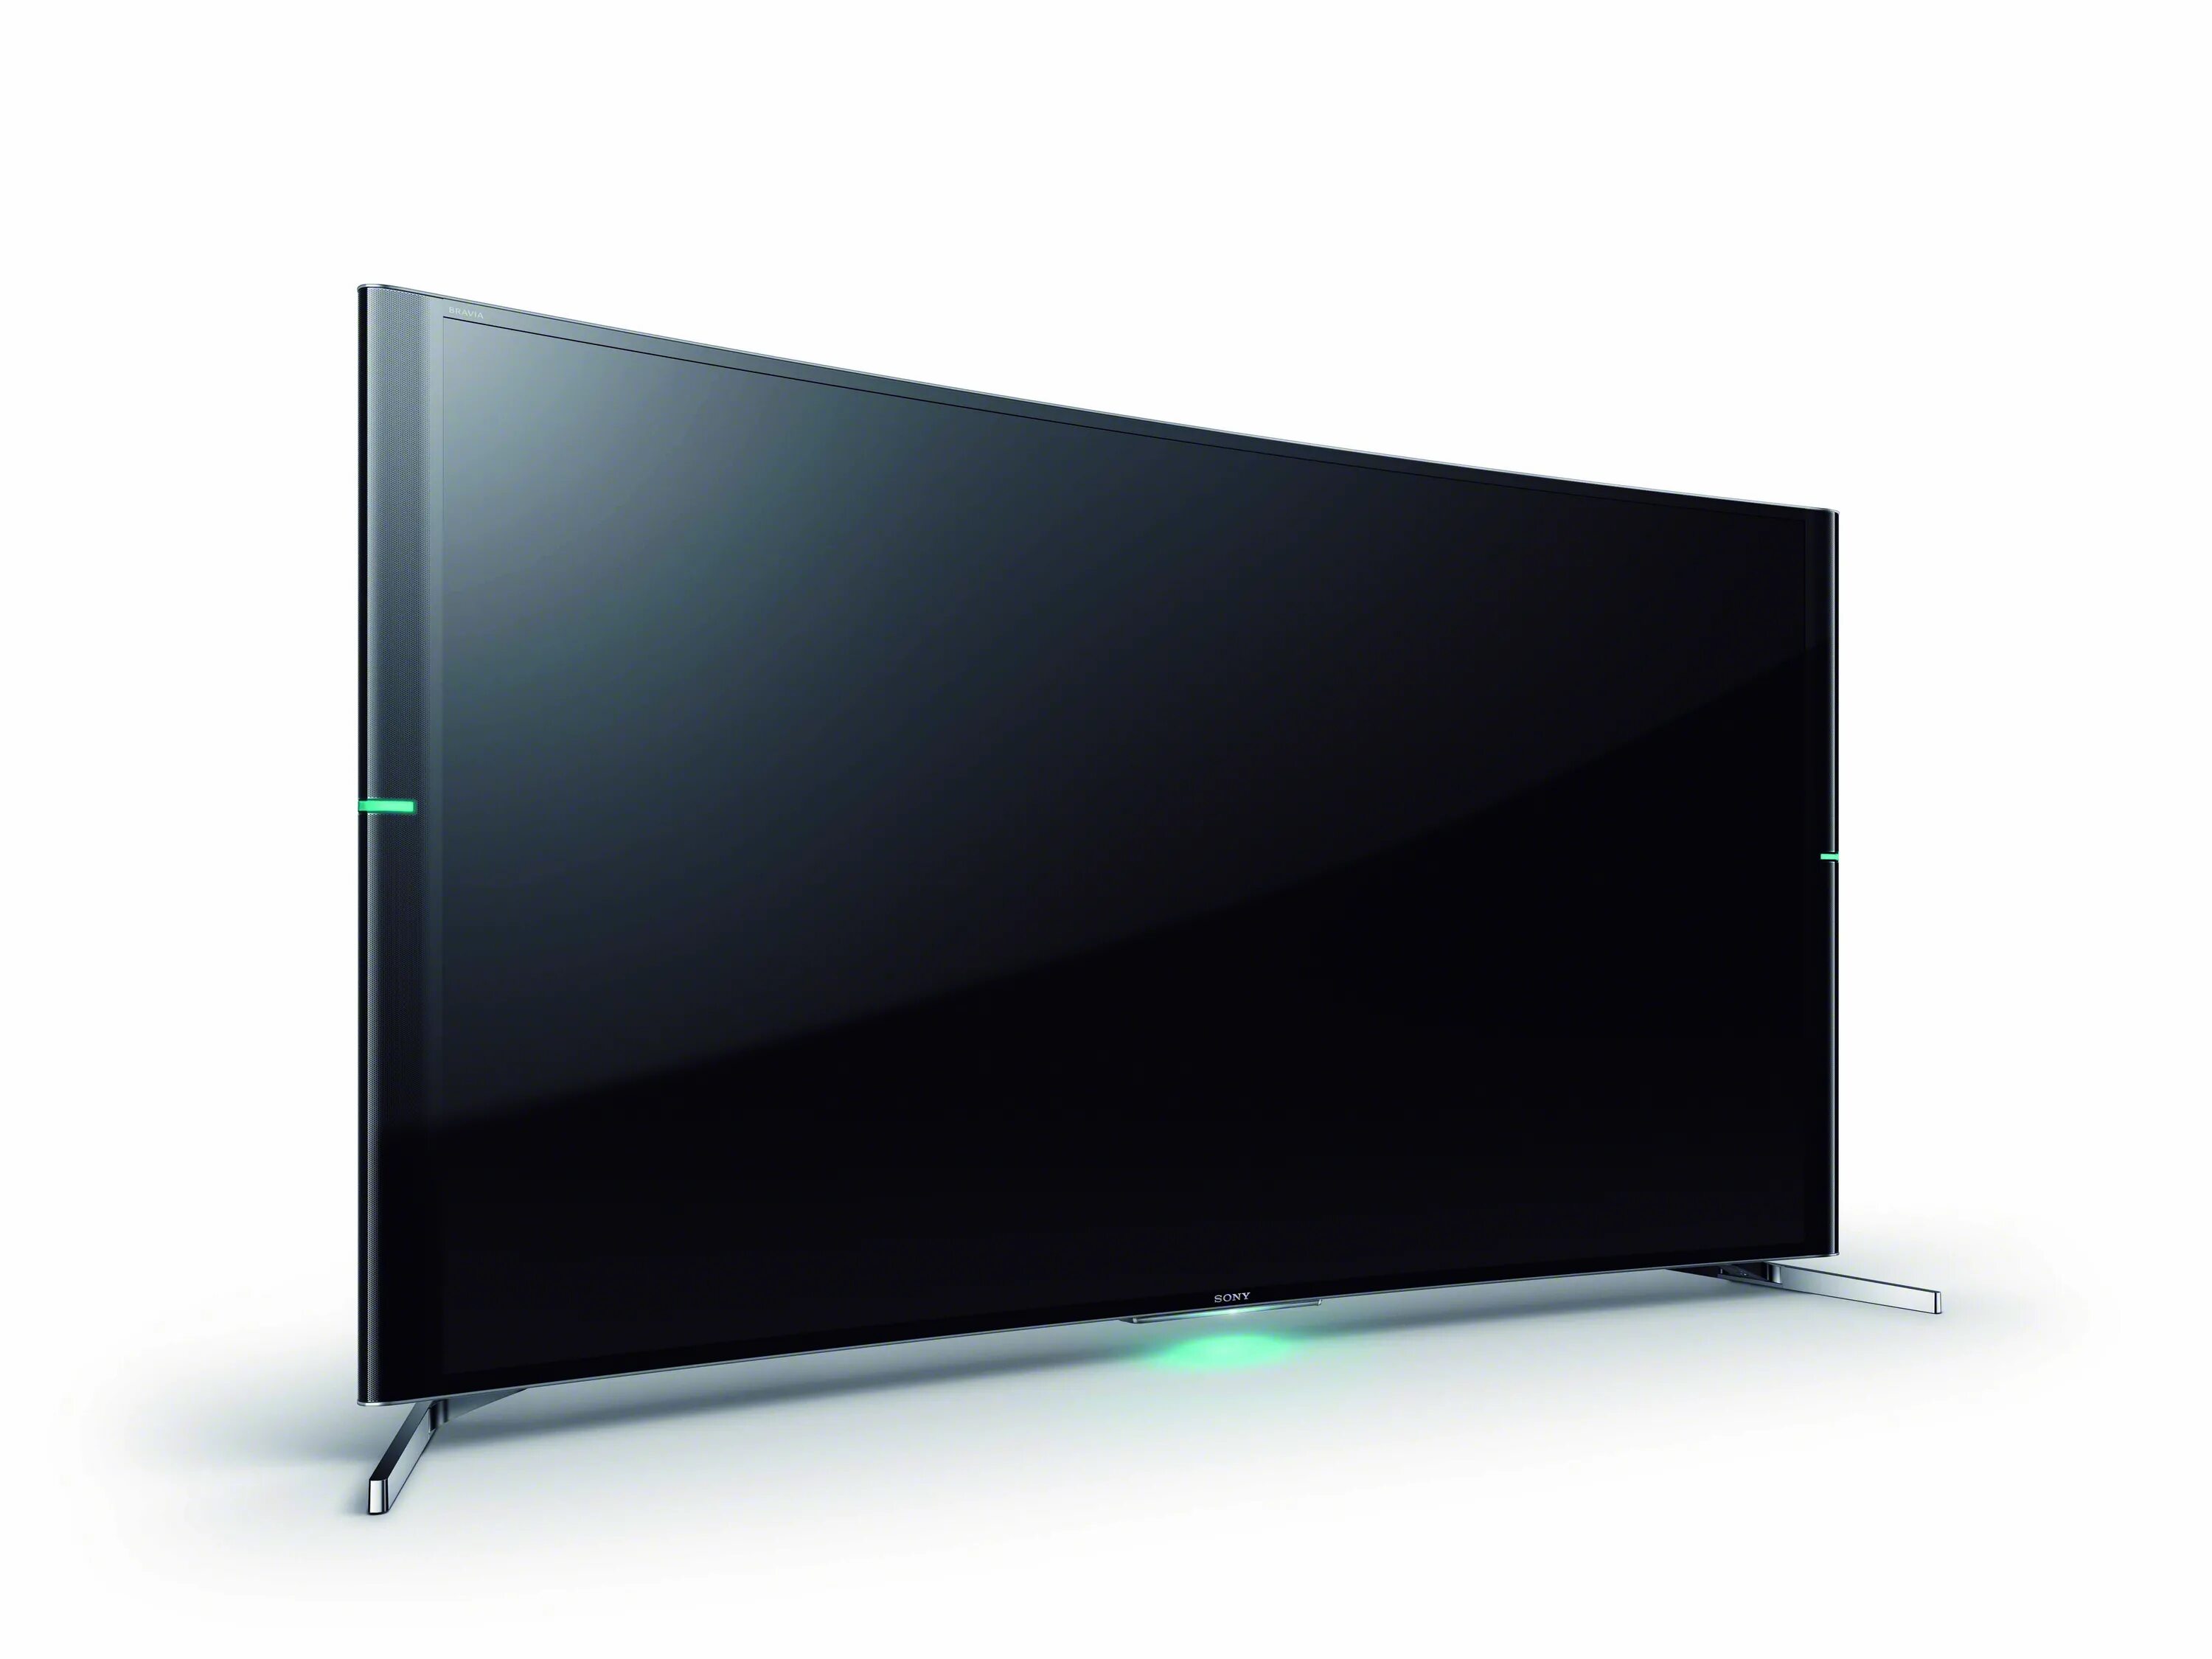 Телевизор Sony KD-65s9005b 65" (2014). Сони бравиа телевизор 55 дюймов. Телевизор Sony KD-75s9005b 75" (2014).